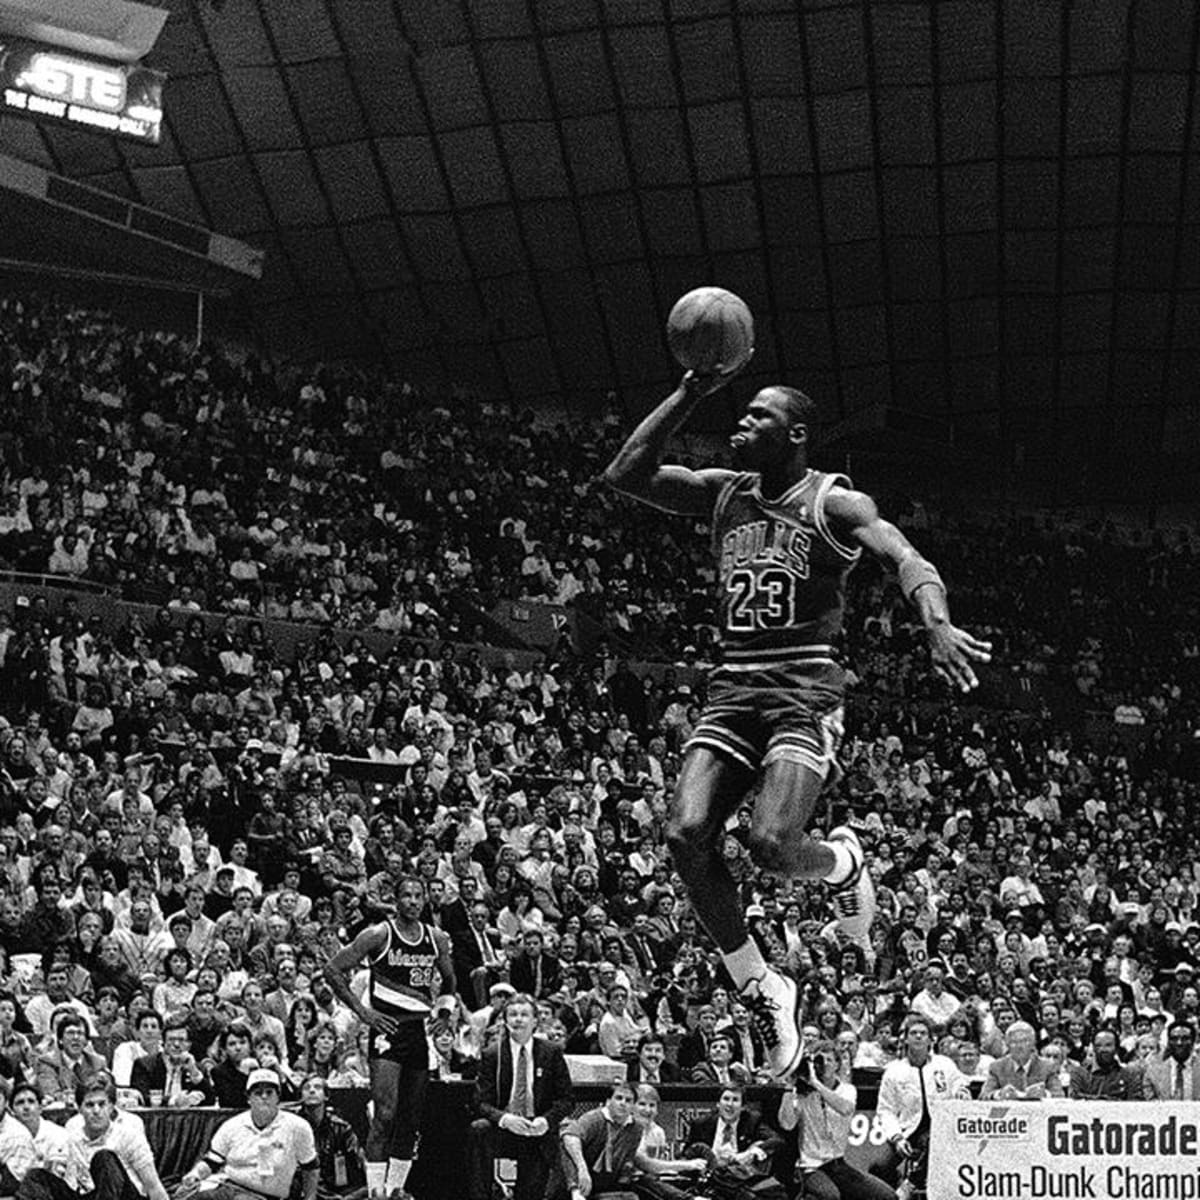 HD wallpaper: basketball player dunk illustration, sports, dark, NBA,  Dwight Howard